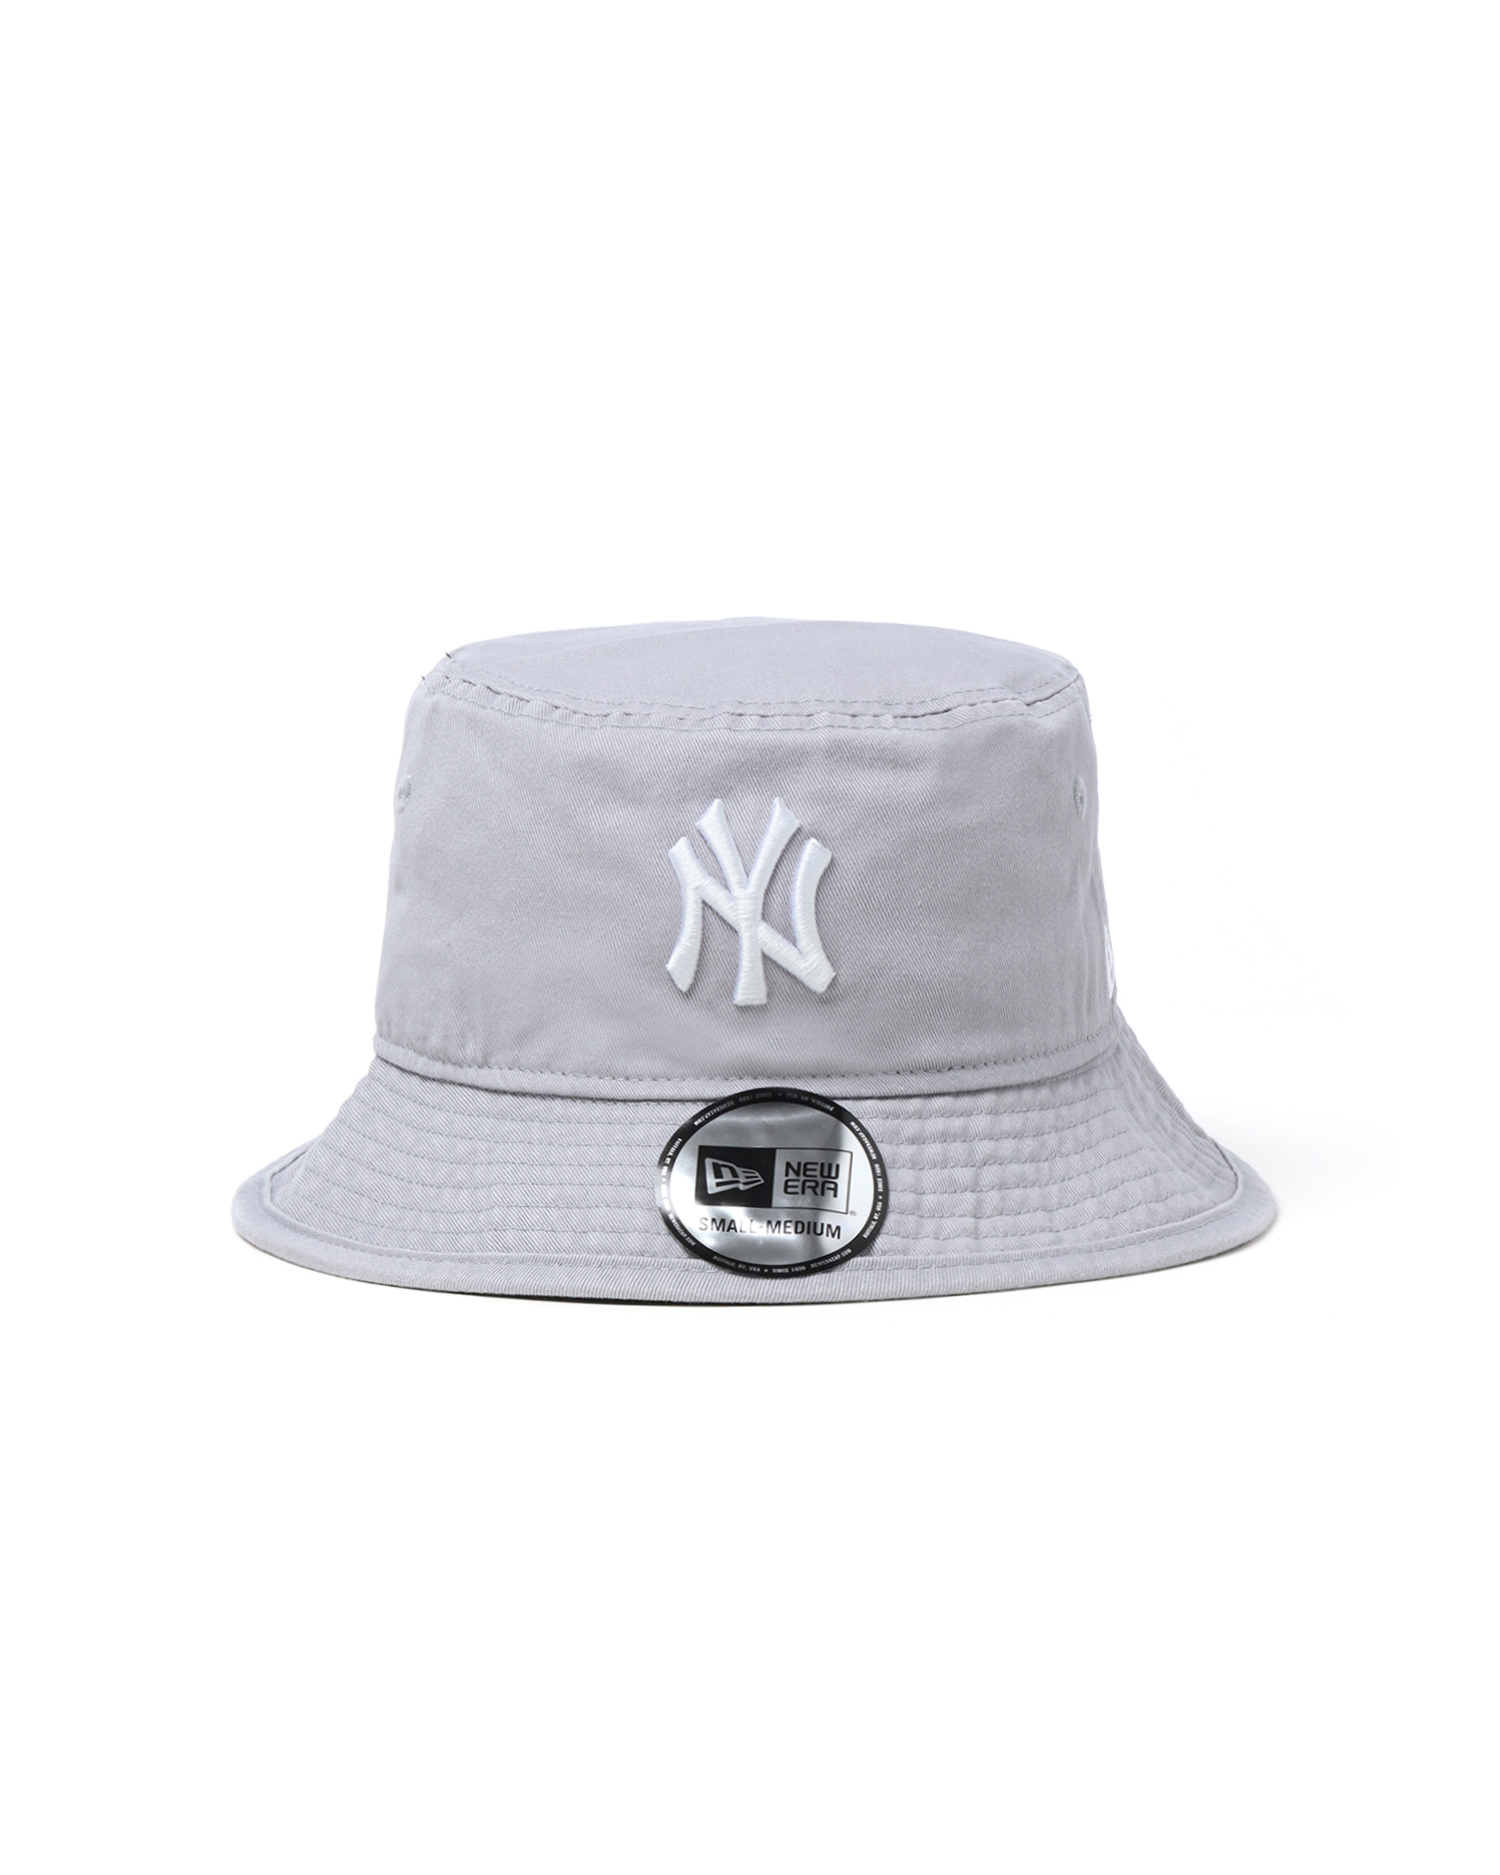 New Era New York Yankees Bucket Hat  Caps  Hats  Stirling Sports